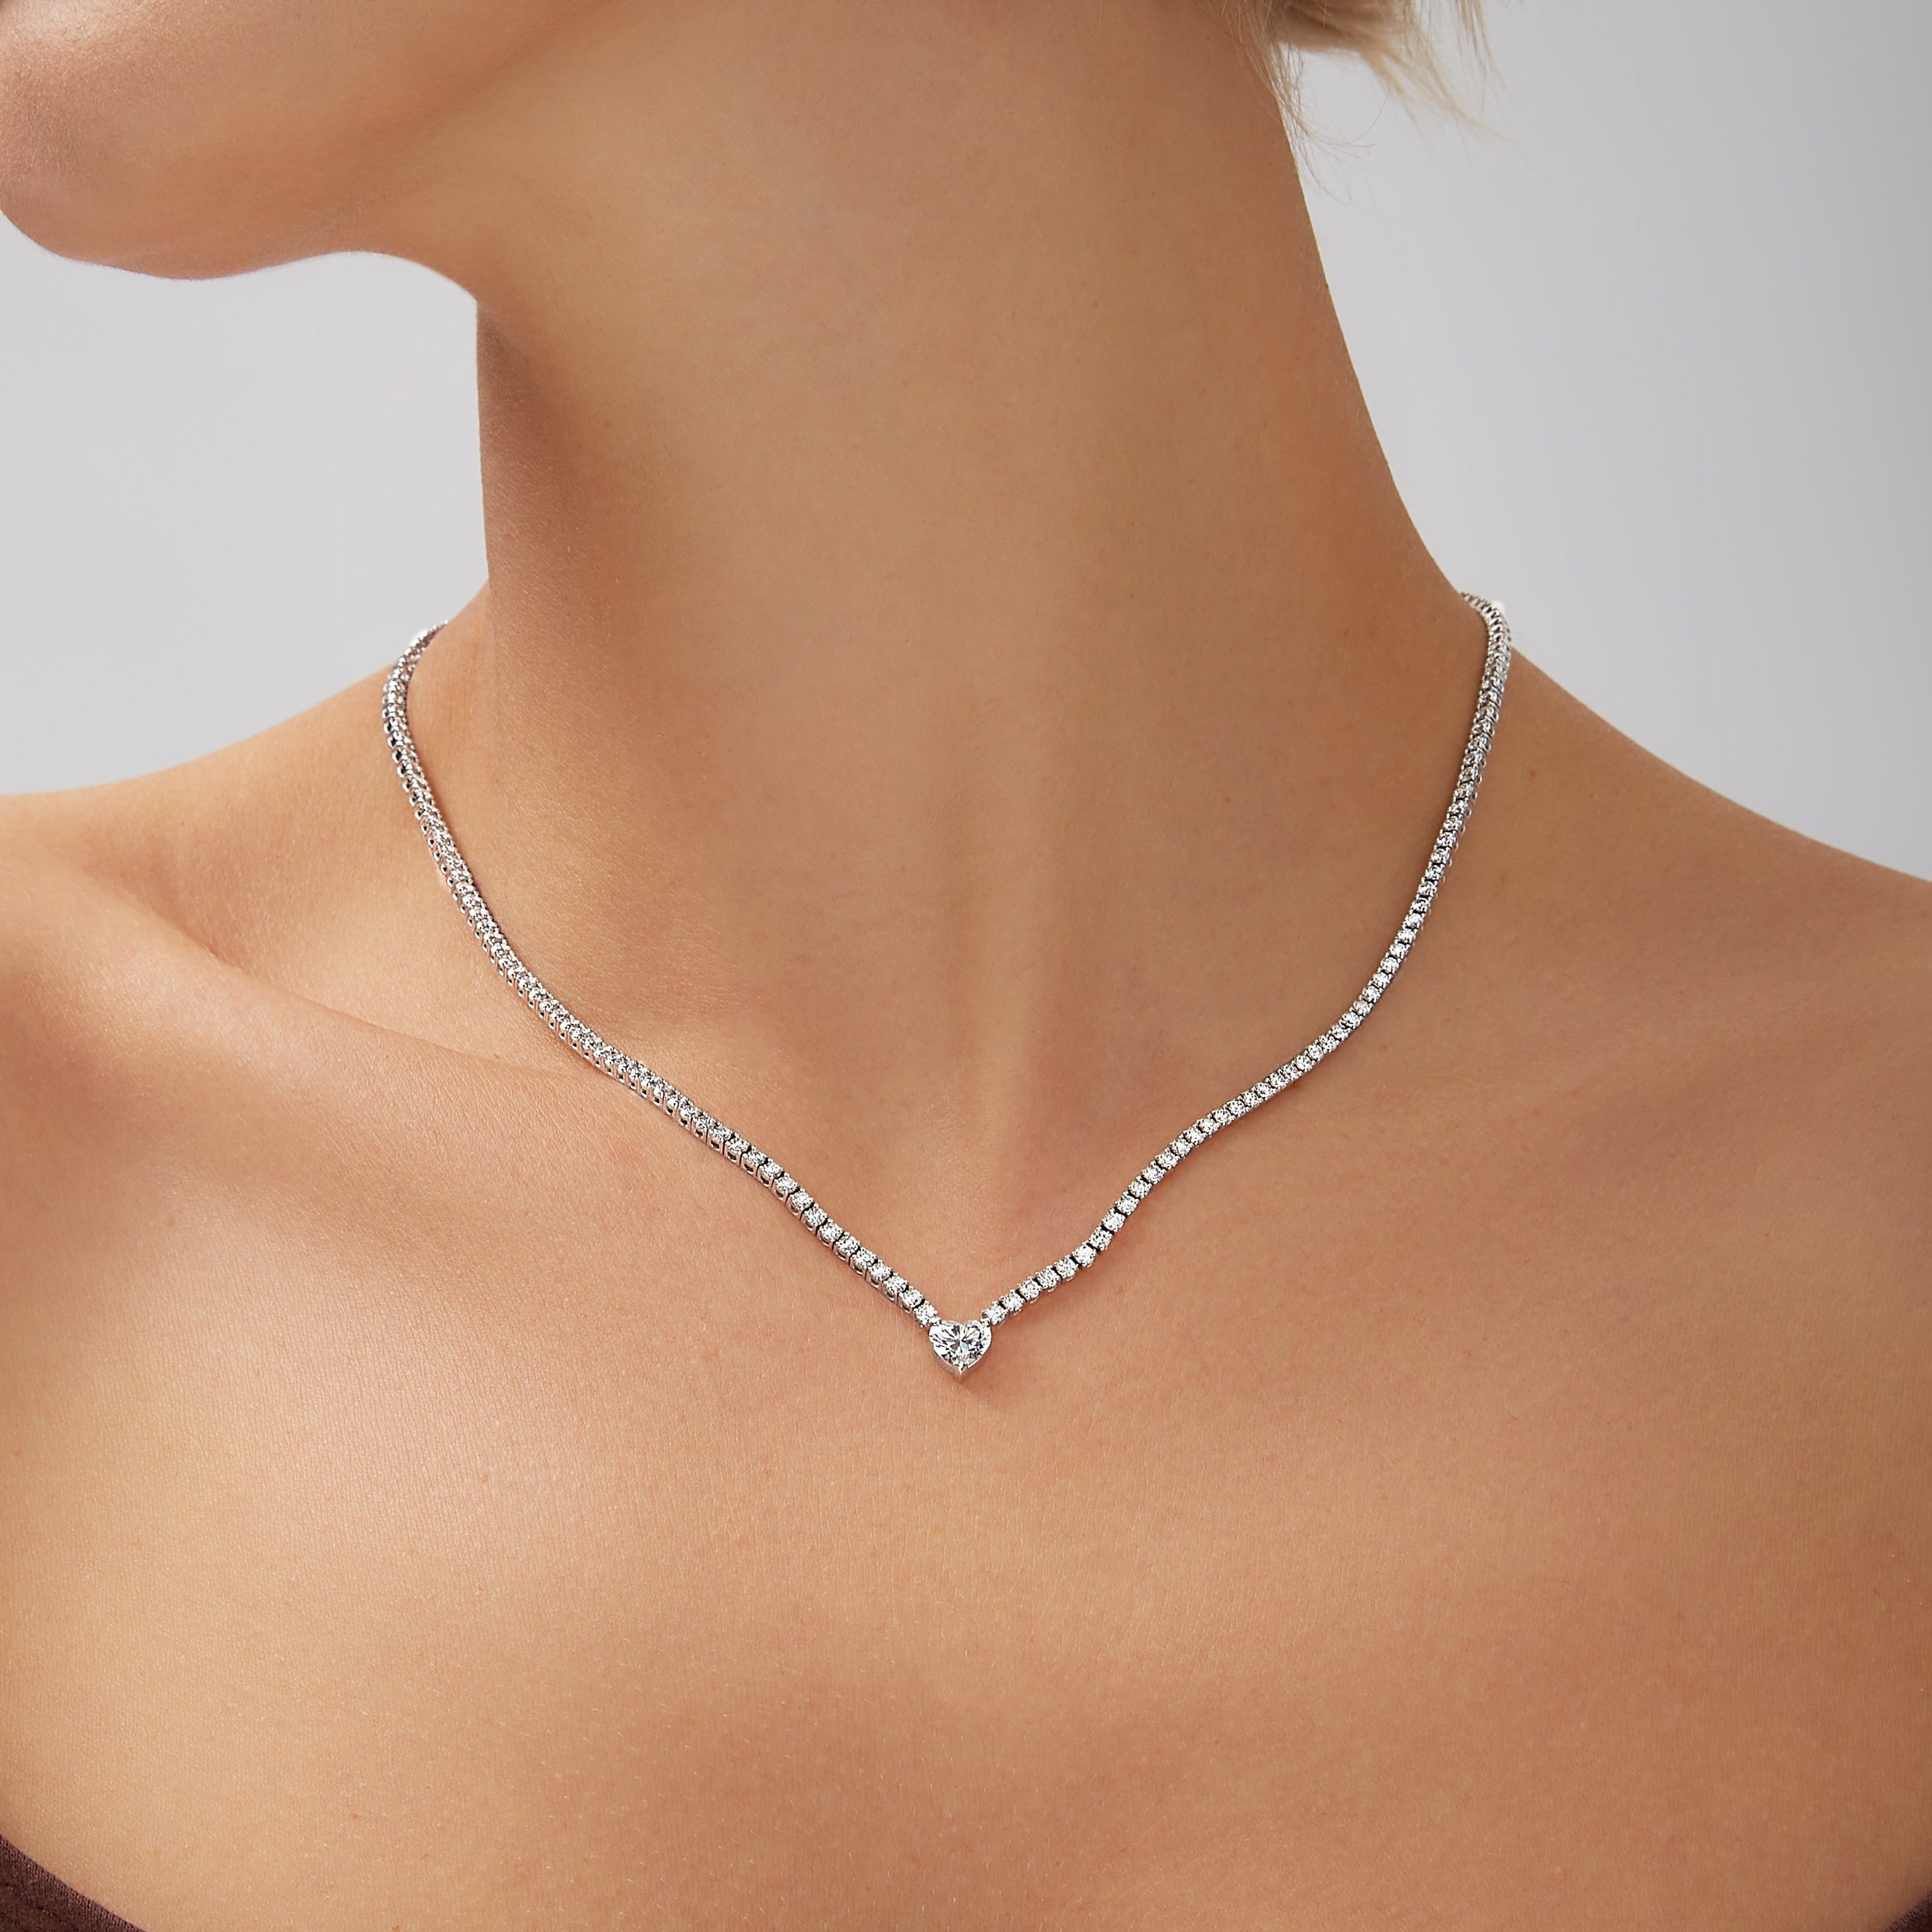 5.91ct Heart Shape Center Stone Diamond Tennis Necklace in 18K White Gold